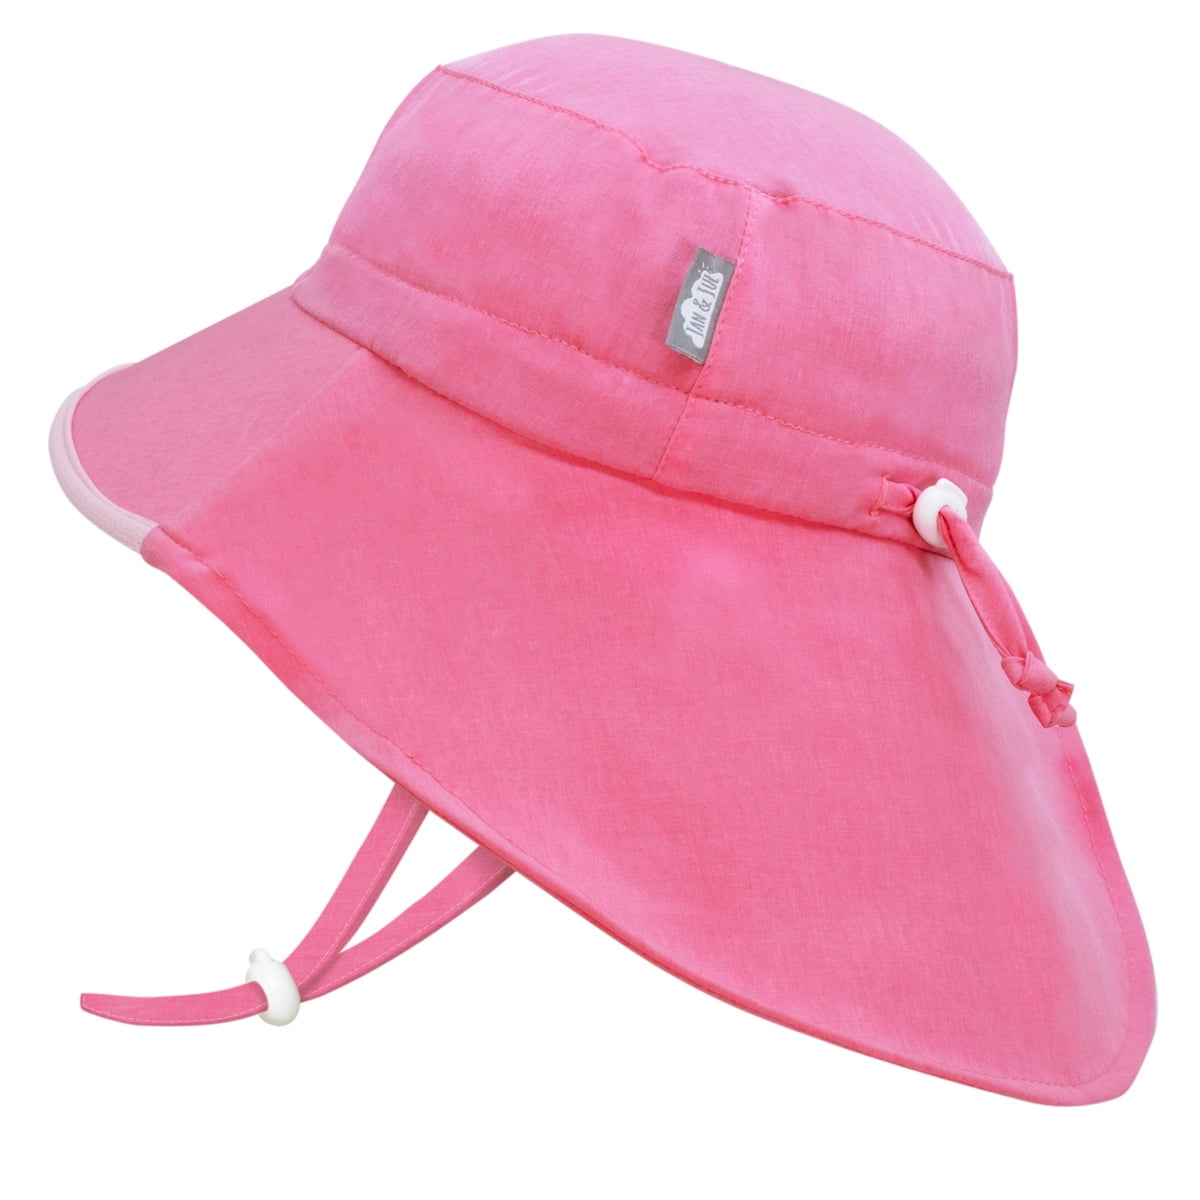 JAN & JUL Boys Girls Unisex Warm Winter Trapper Hat for Toddler and Kids 